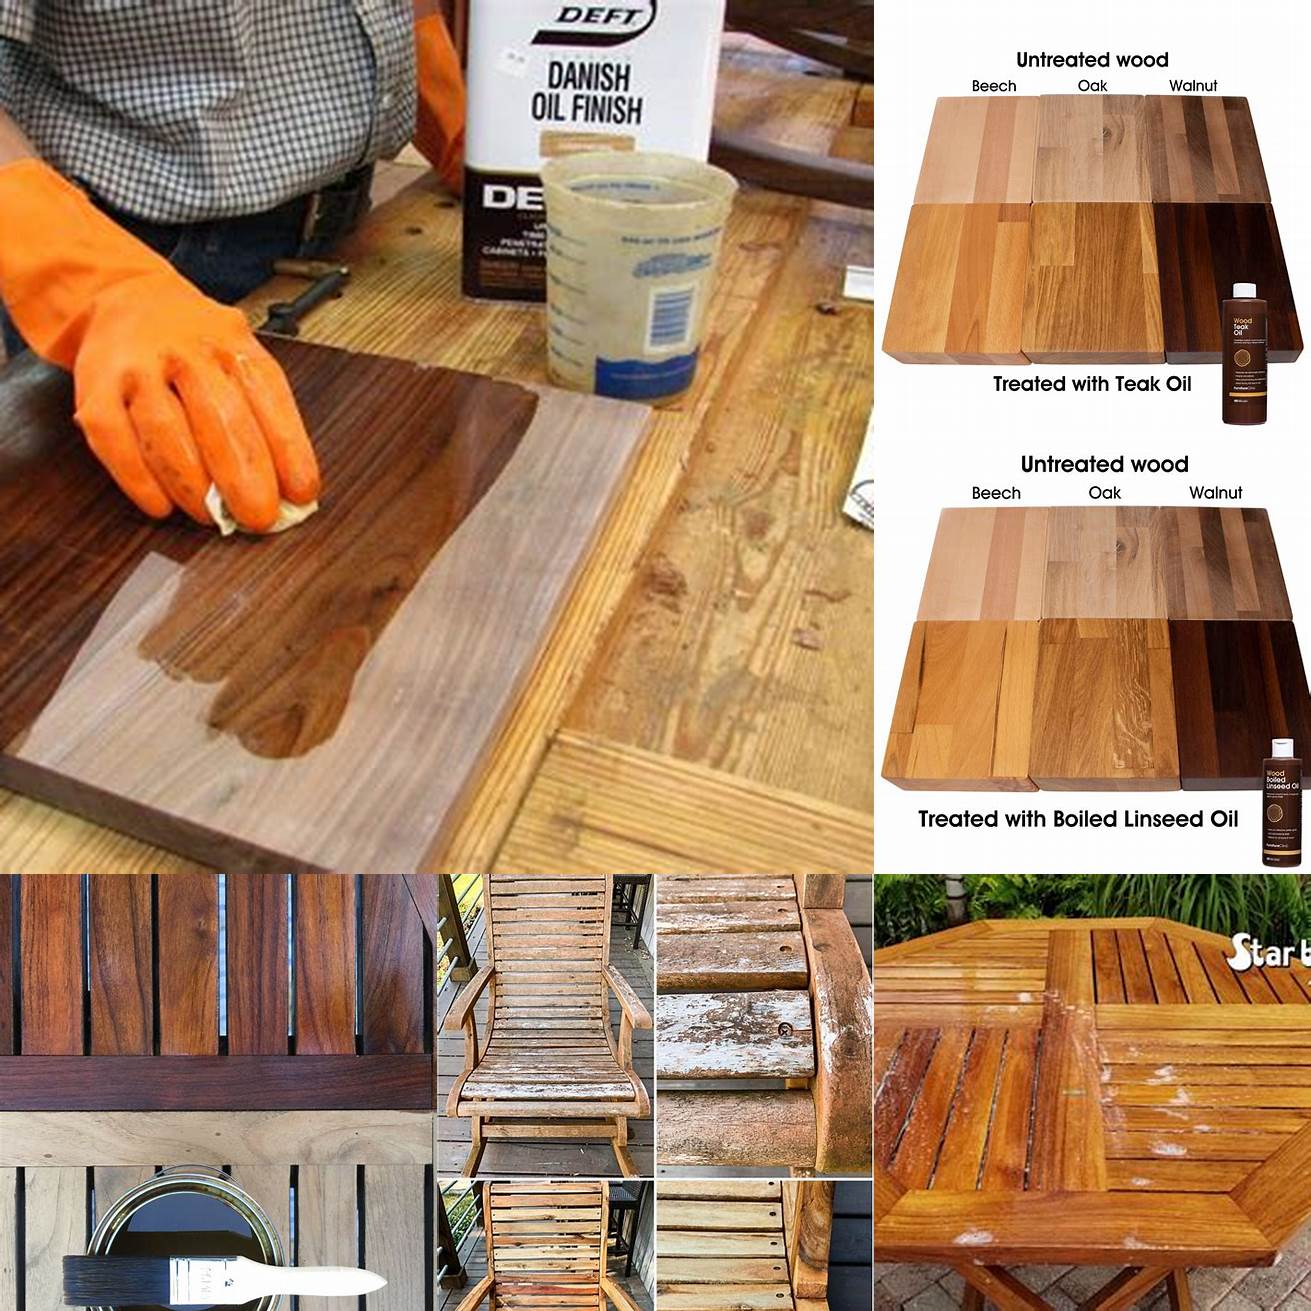 Wood surface after multiple coats of teak oil